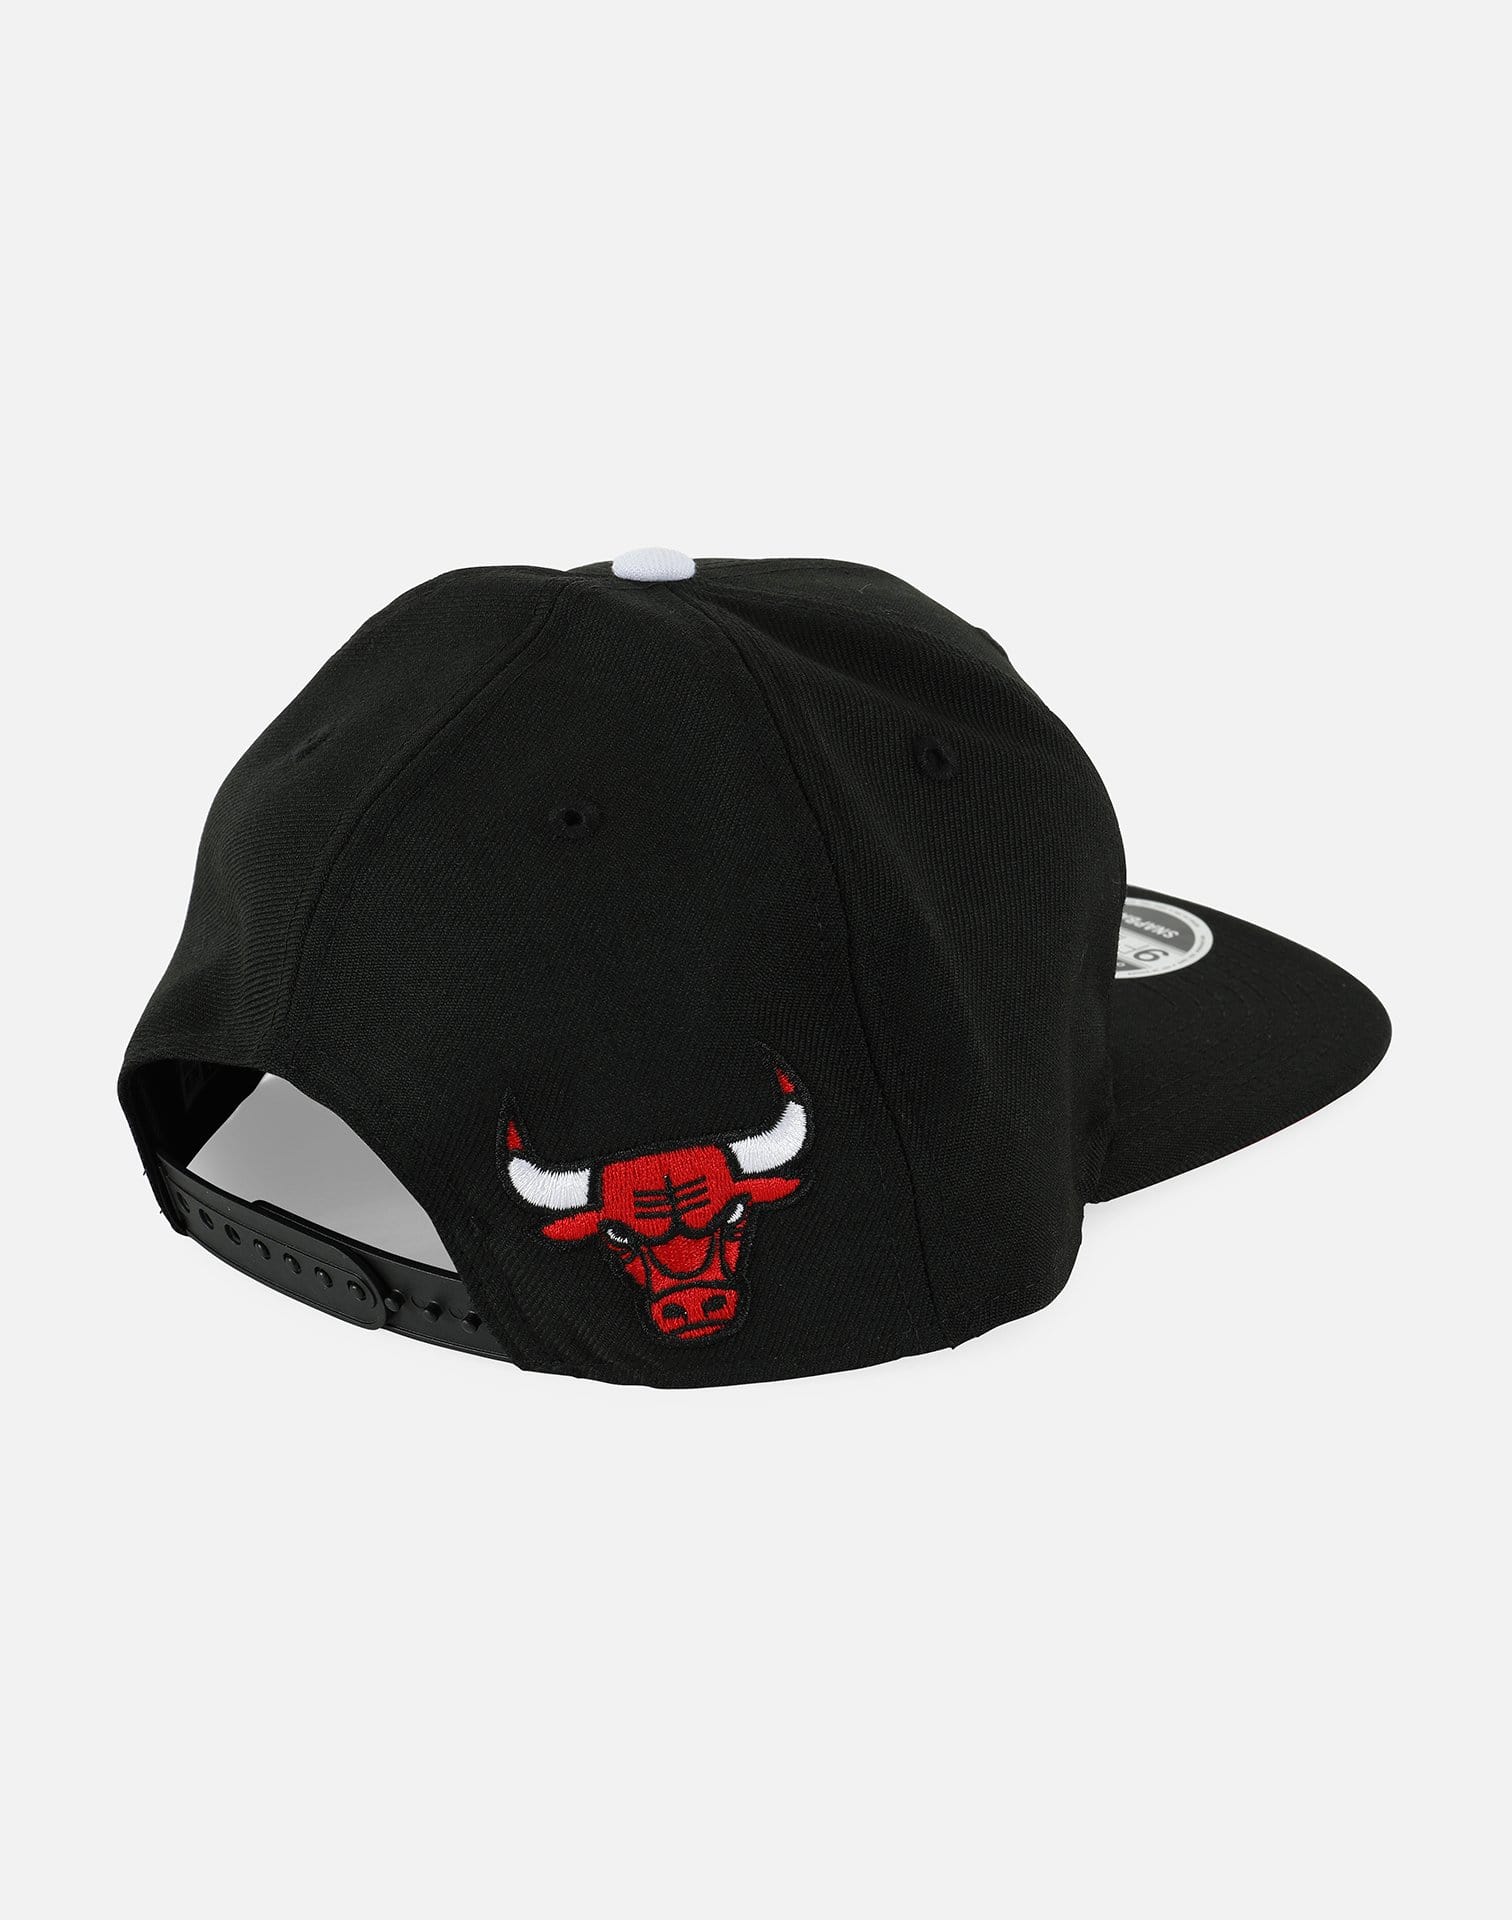 New Era Exclusive Customs NBA Chicago Bulls 015 Snapback Hat